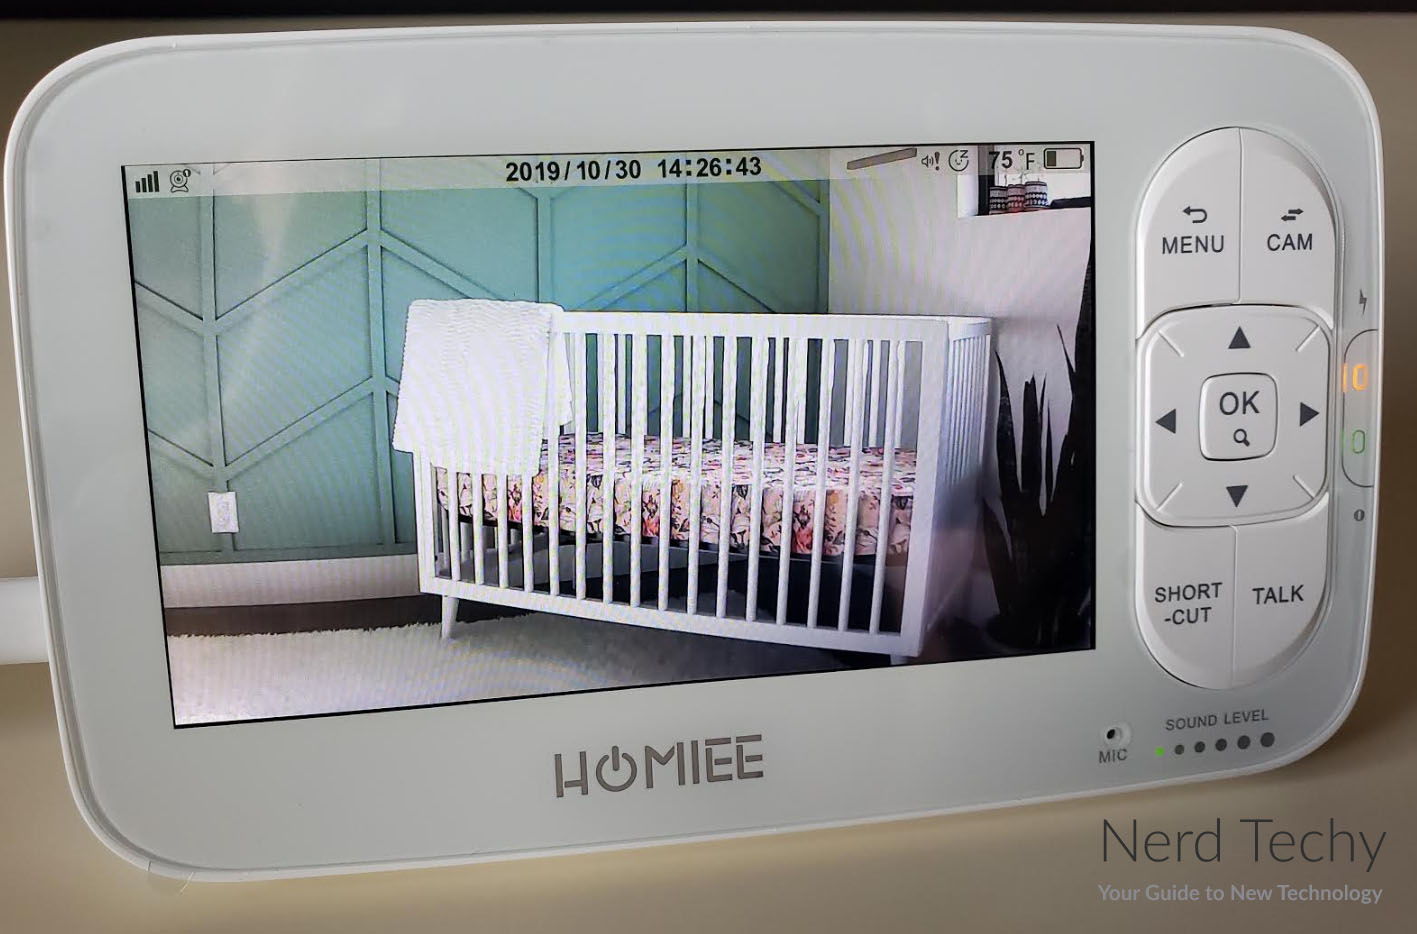 HOMIEE Video Baby Monitor